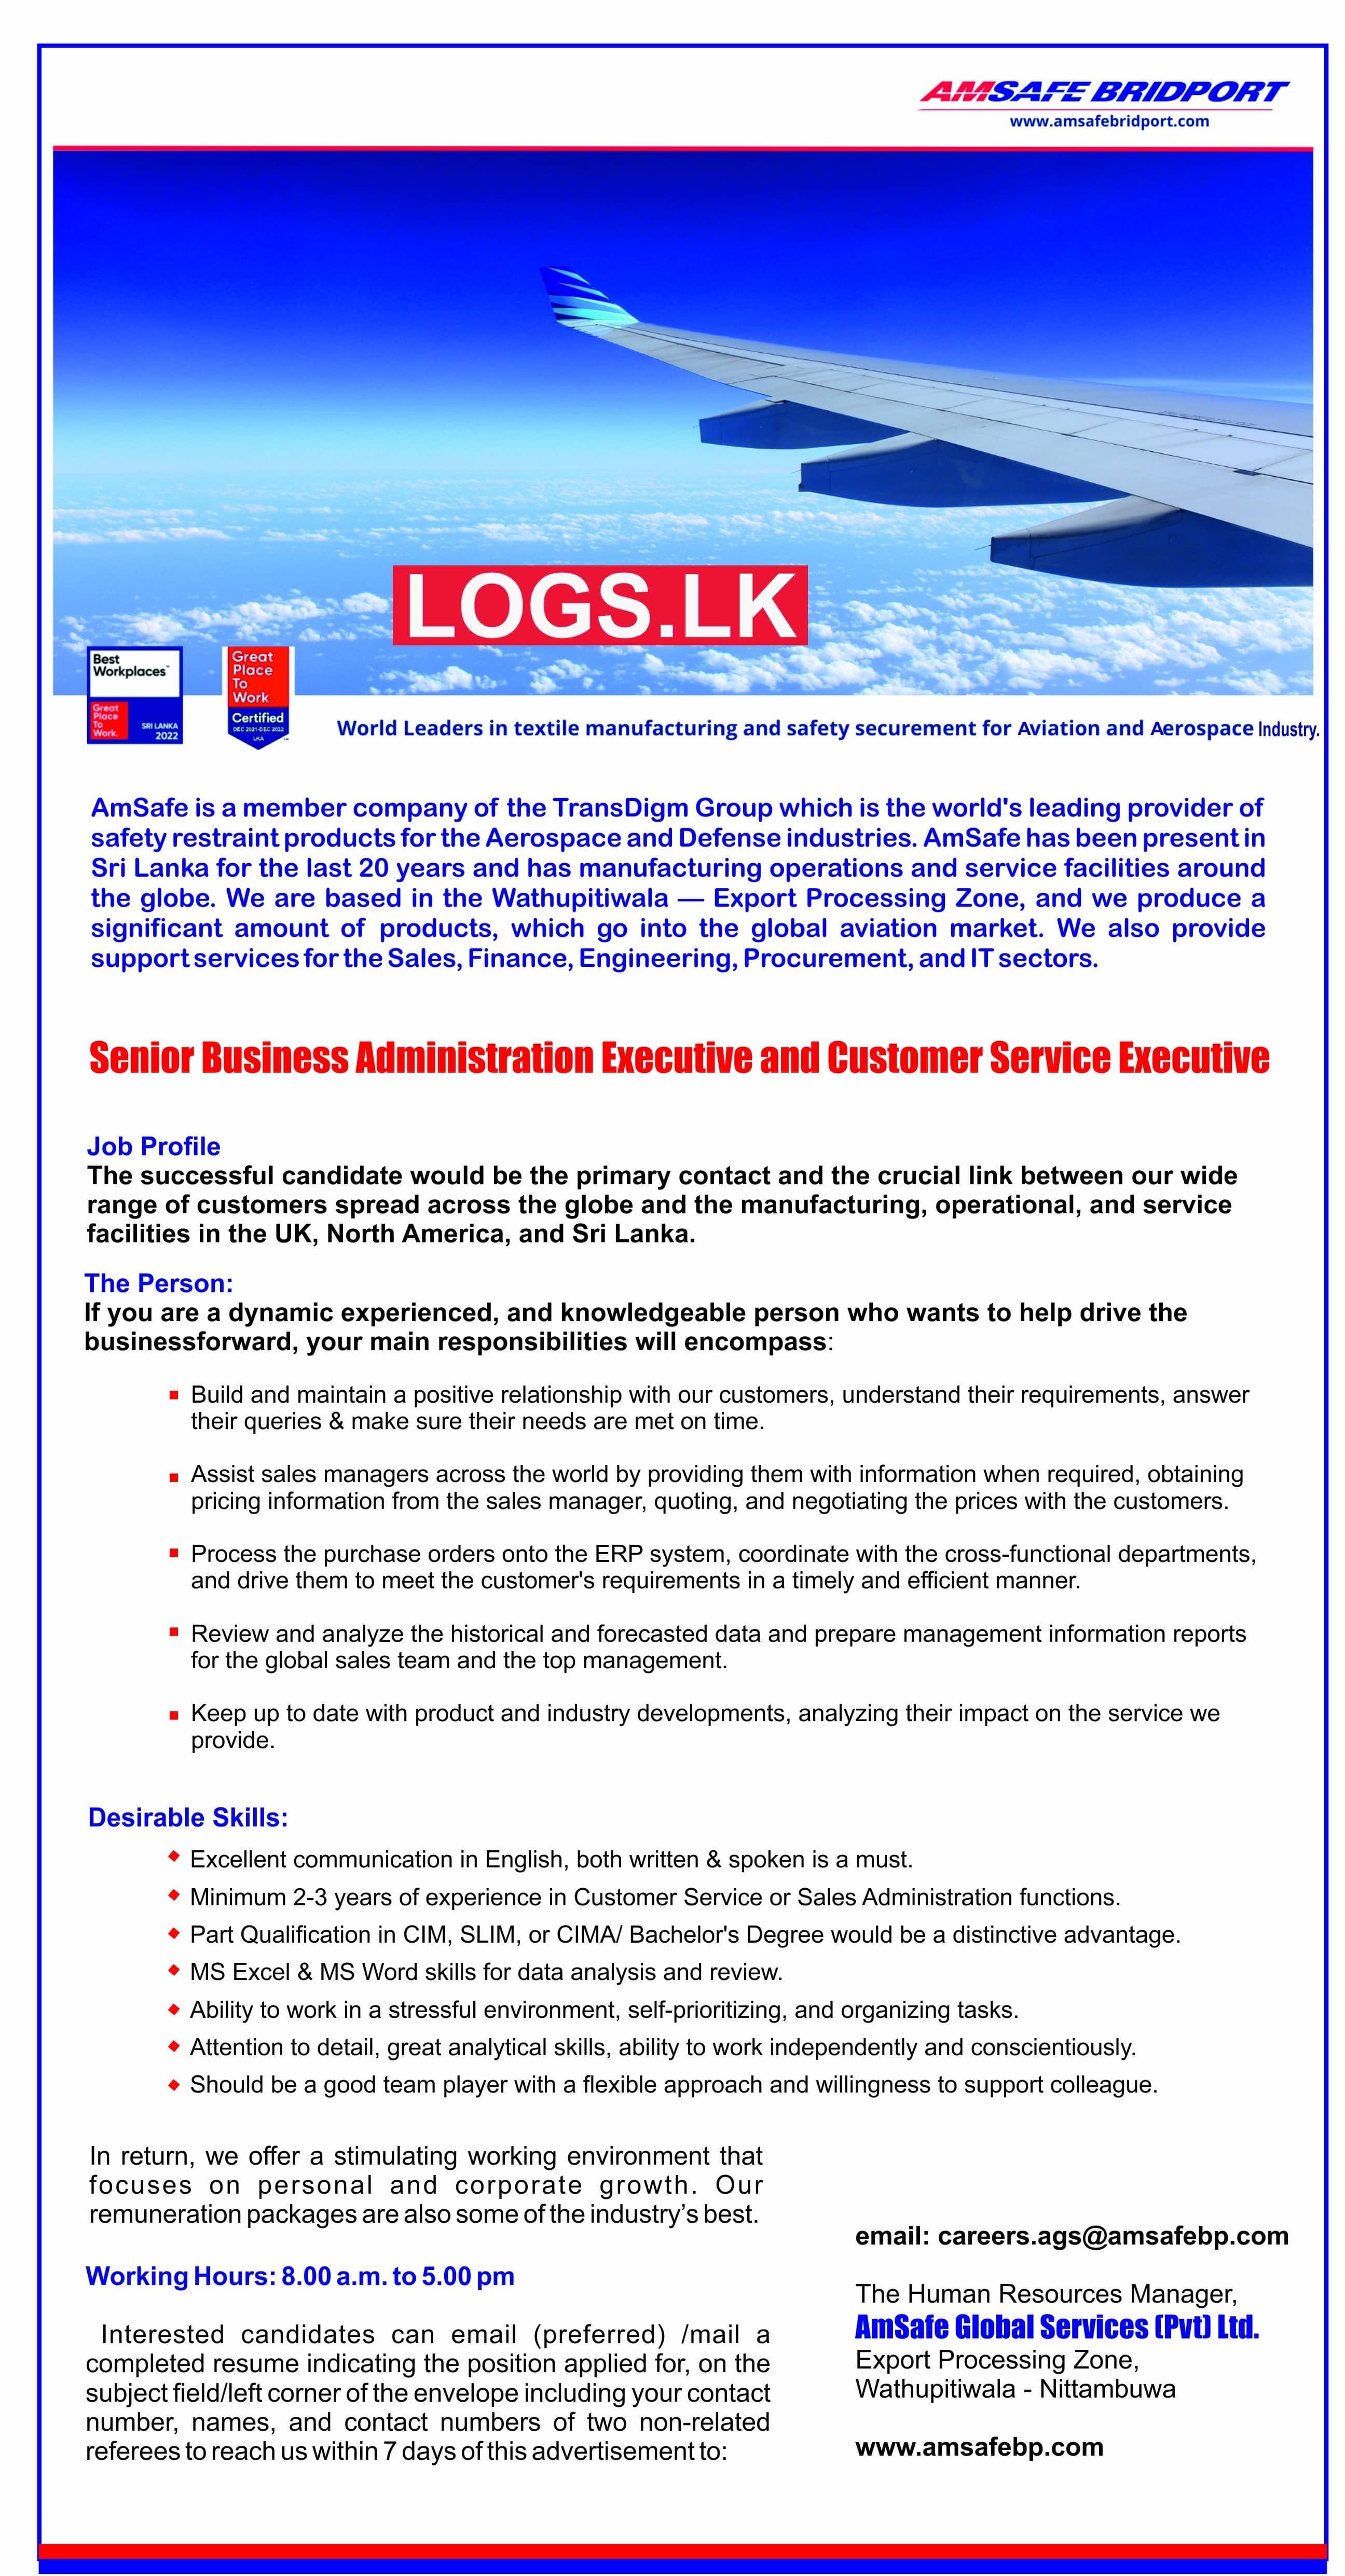 Executives Job Vacancies at AmSafe Global Services (Pvt) Ltd Job Vacancies in Sri Lanka